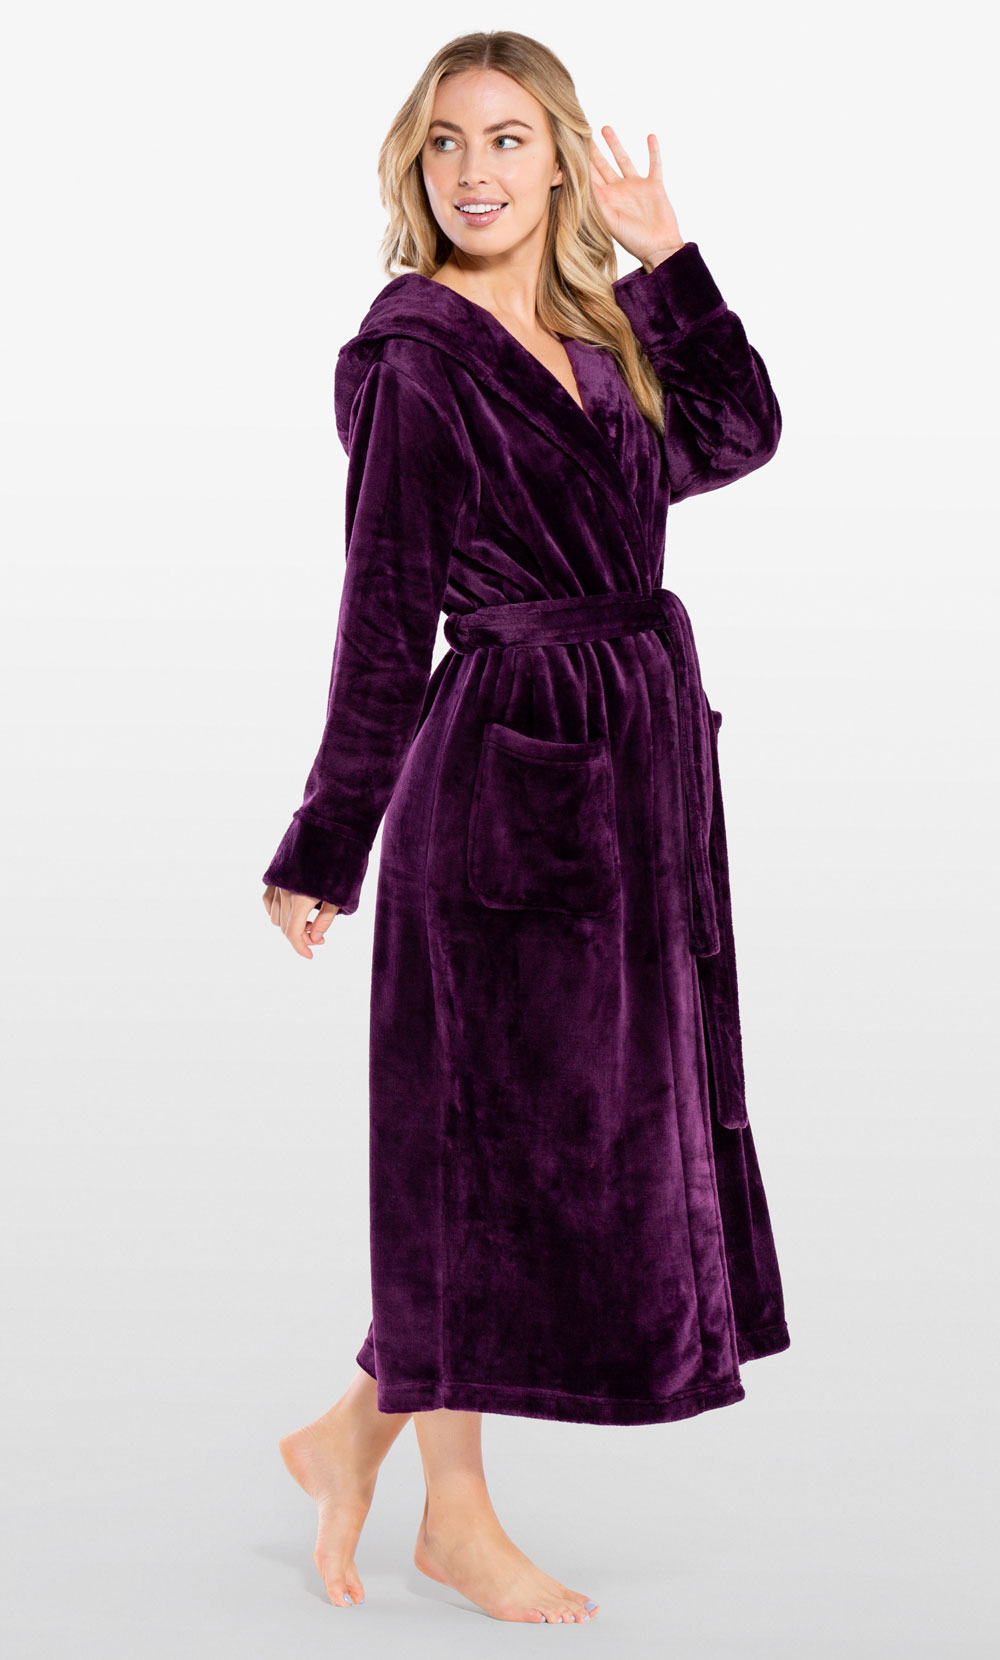 Super Soft Purple Plush Hooded Women's Robe-Robemart.com